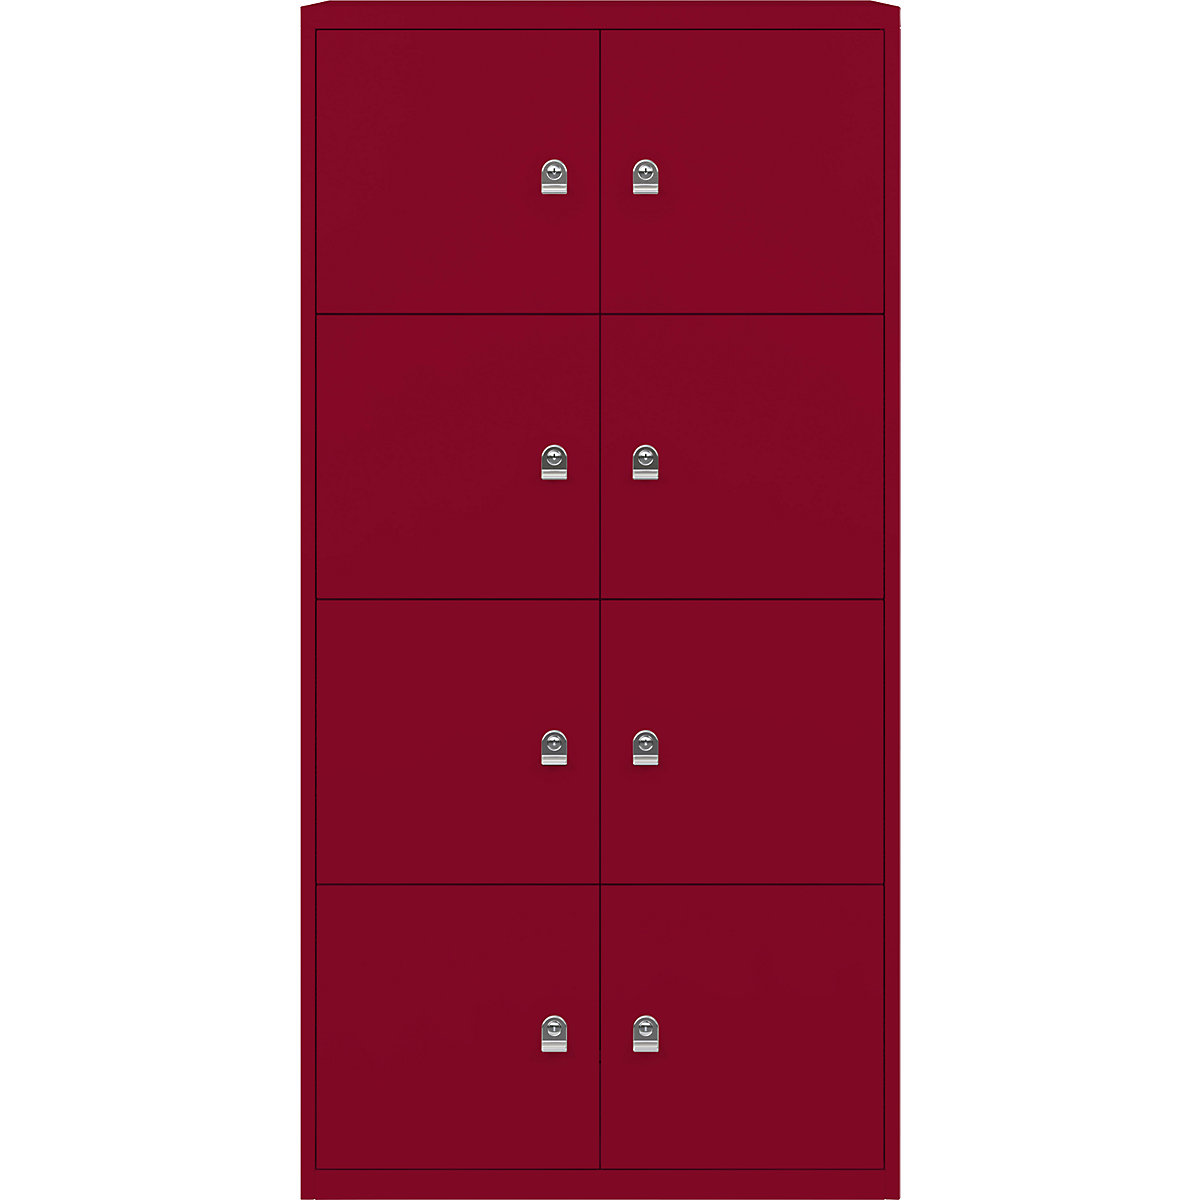 Armoire à casiers LateralFile™ – BISLEY, 8 casiers hauteur 375 mm, rouge cardinal-12